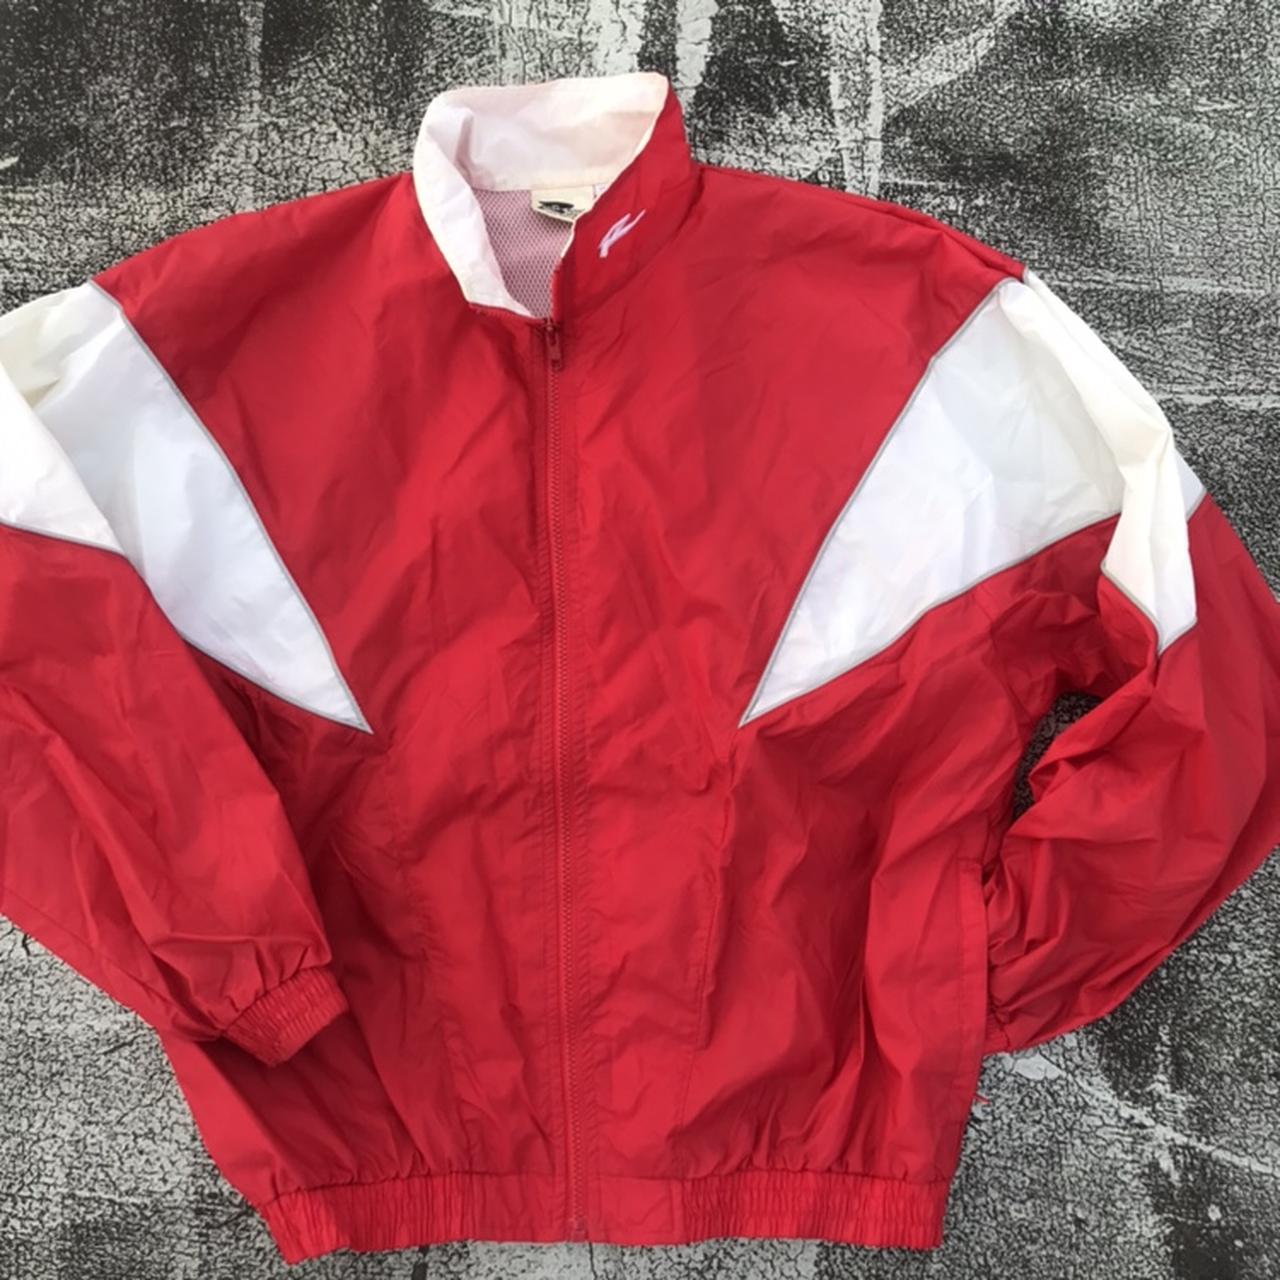 Vintage 90s Red & White Windbreaker Jacket Size:... - Depop